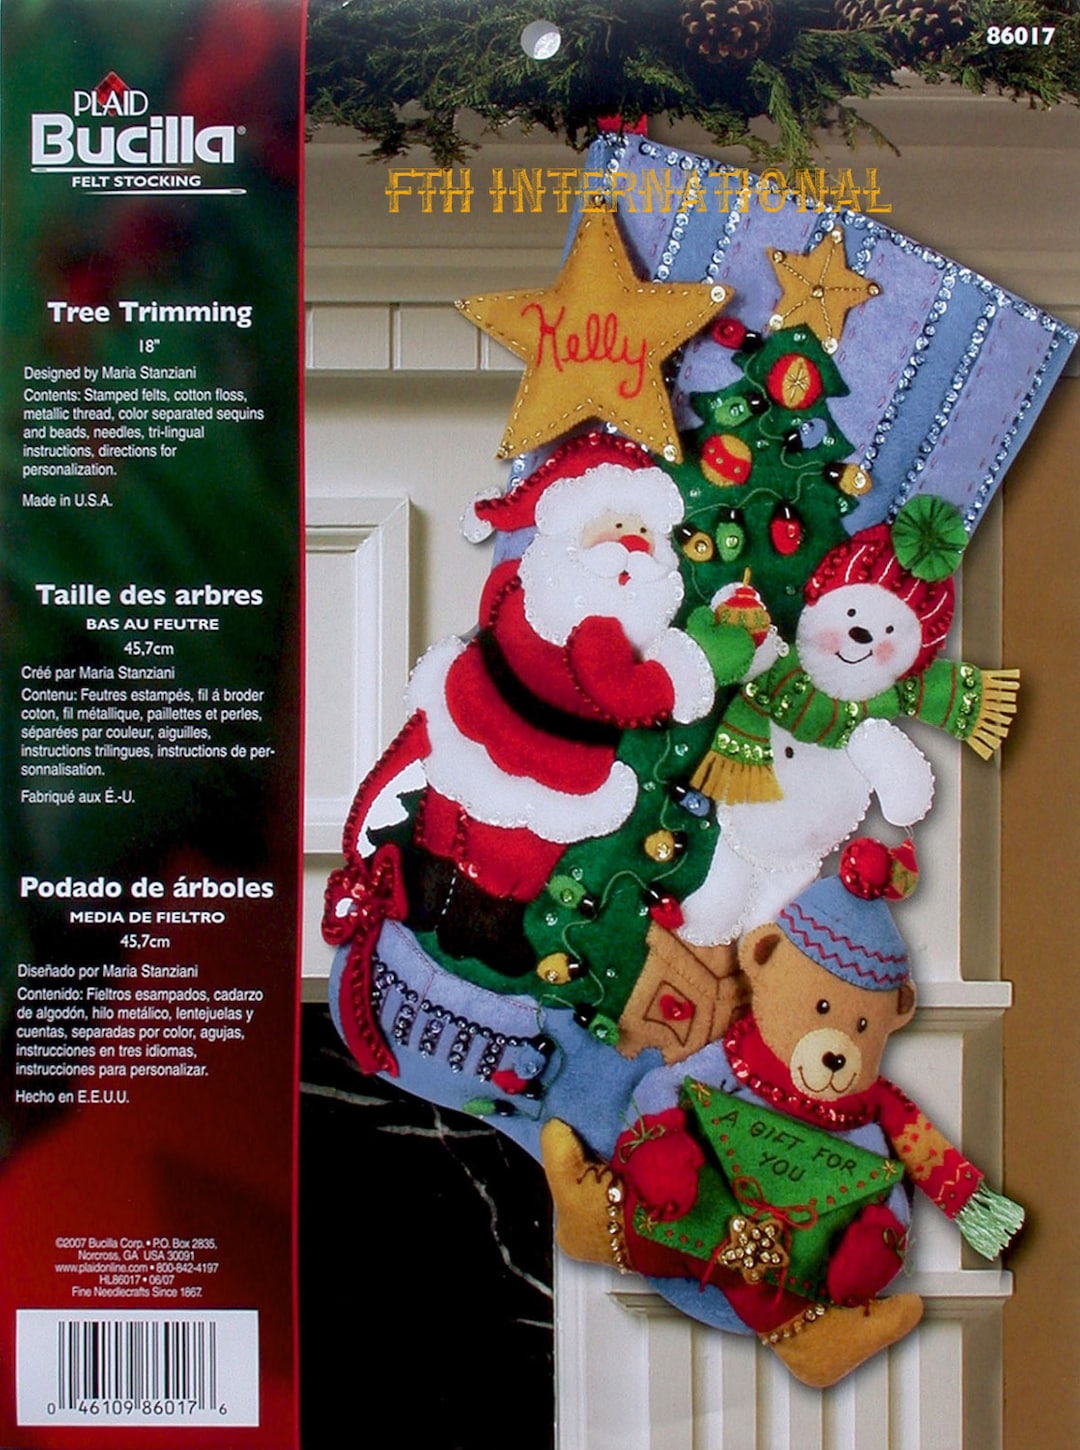 Bucilla Christmas Feast ~ 18 Felt Christmas Stocking Kit #85271, Santa,  Deer DIY